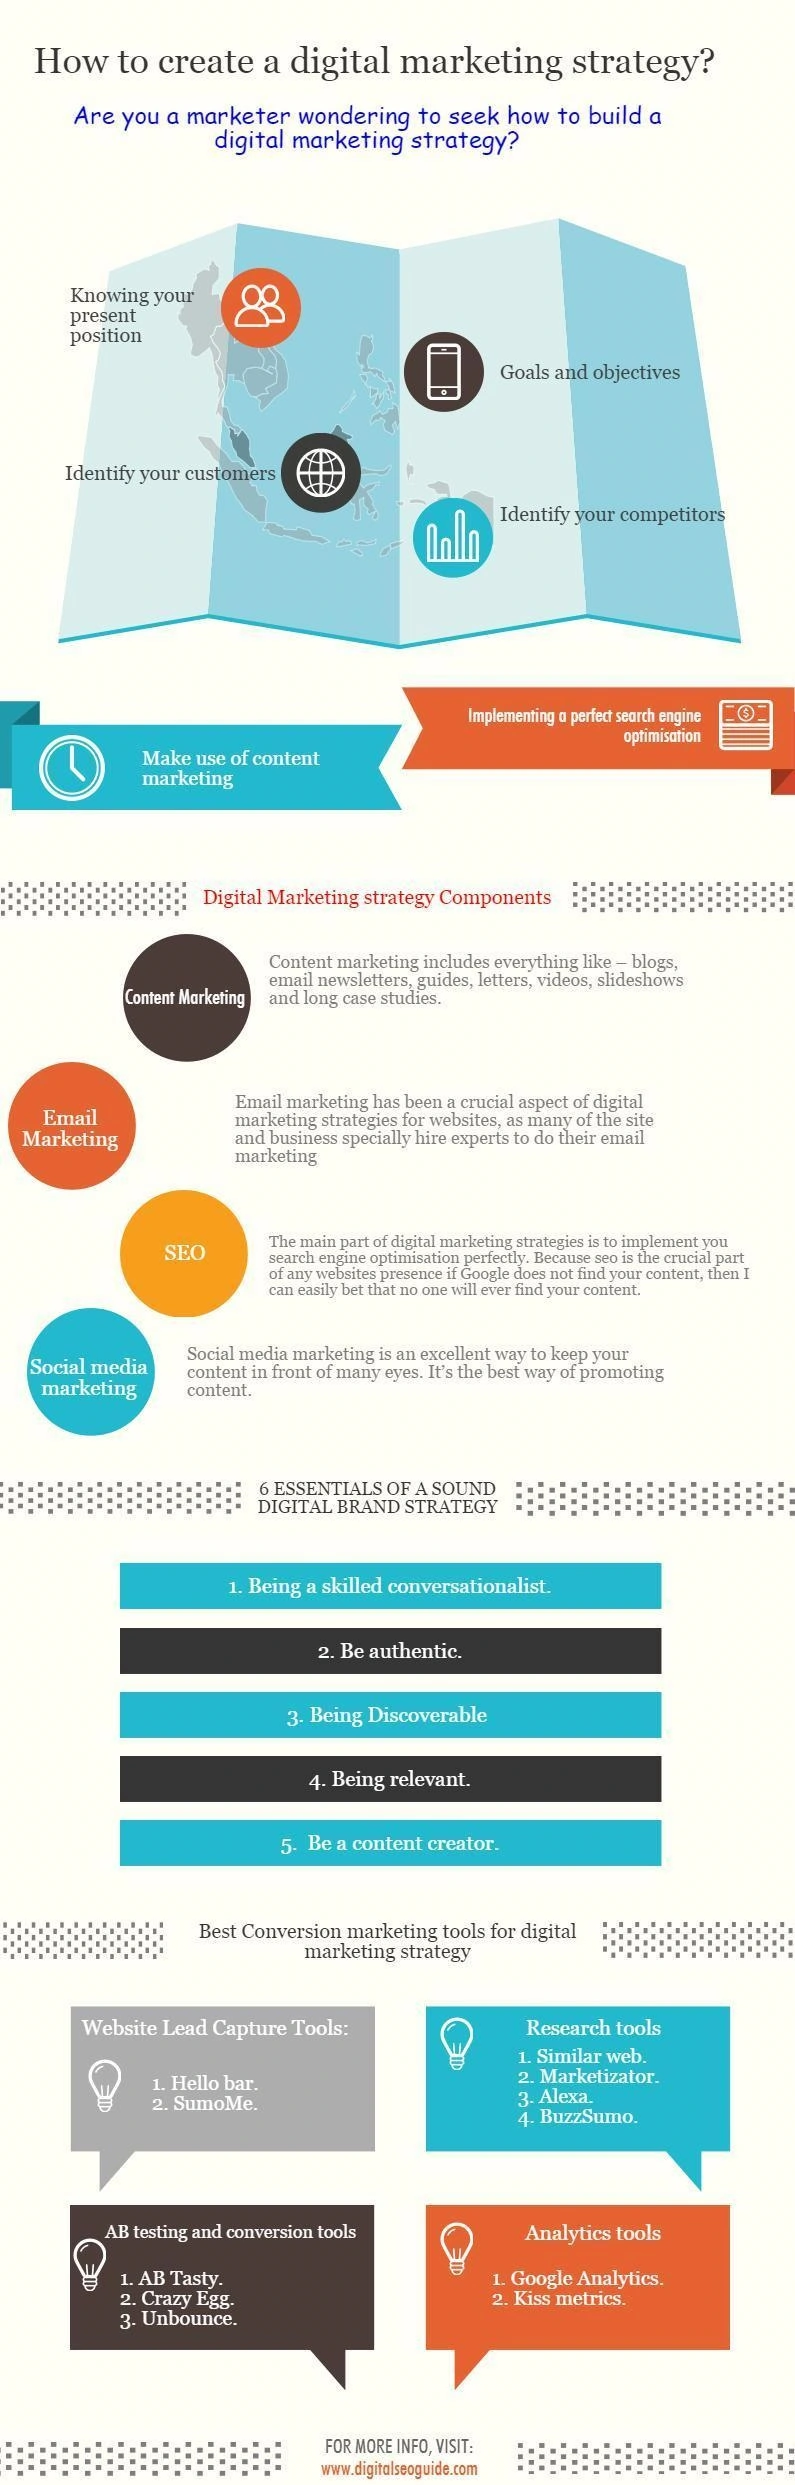 Digital marketing startups startegy infographic 1